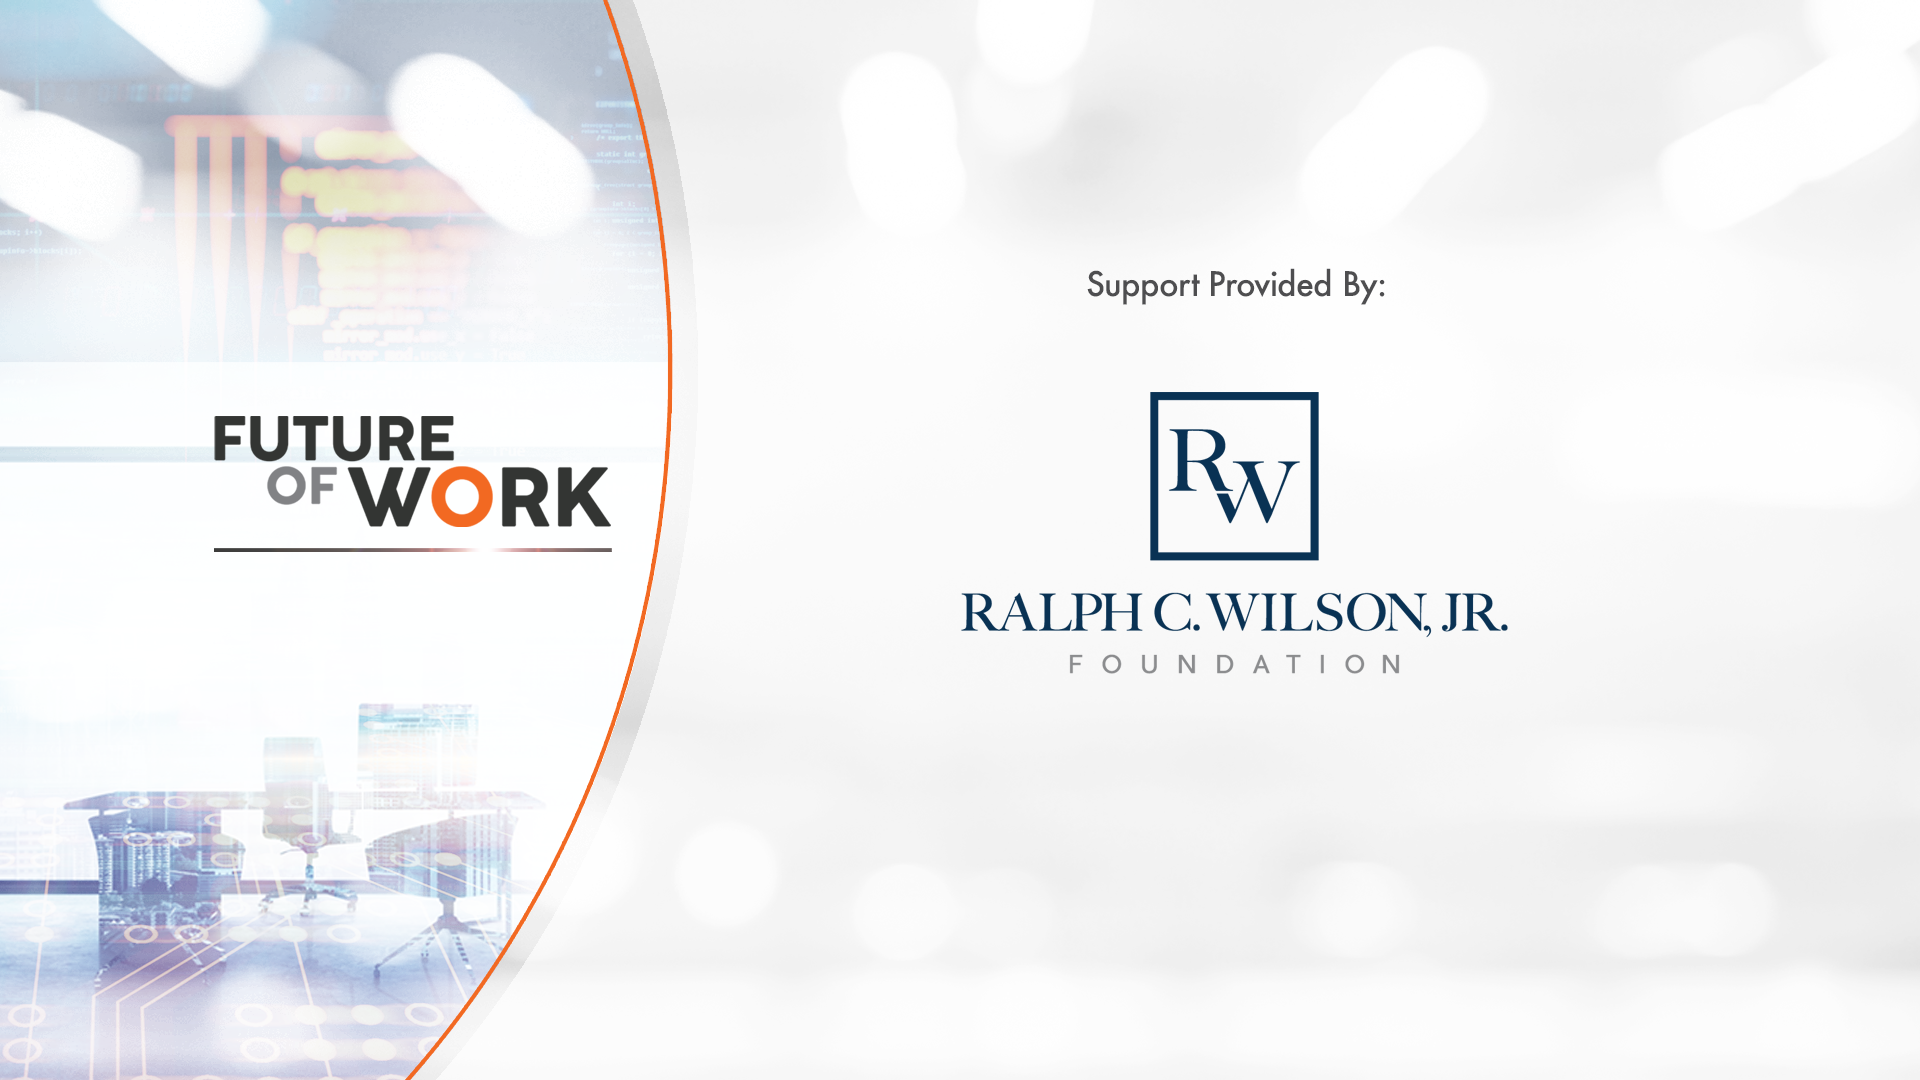 Ralph C. Wilson Jr. Foundation Future of Work sponsorship acknowledgement